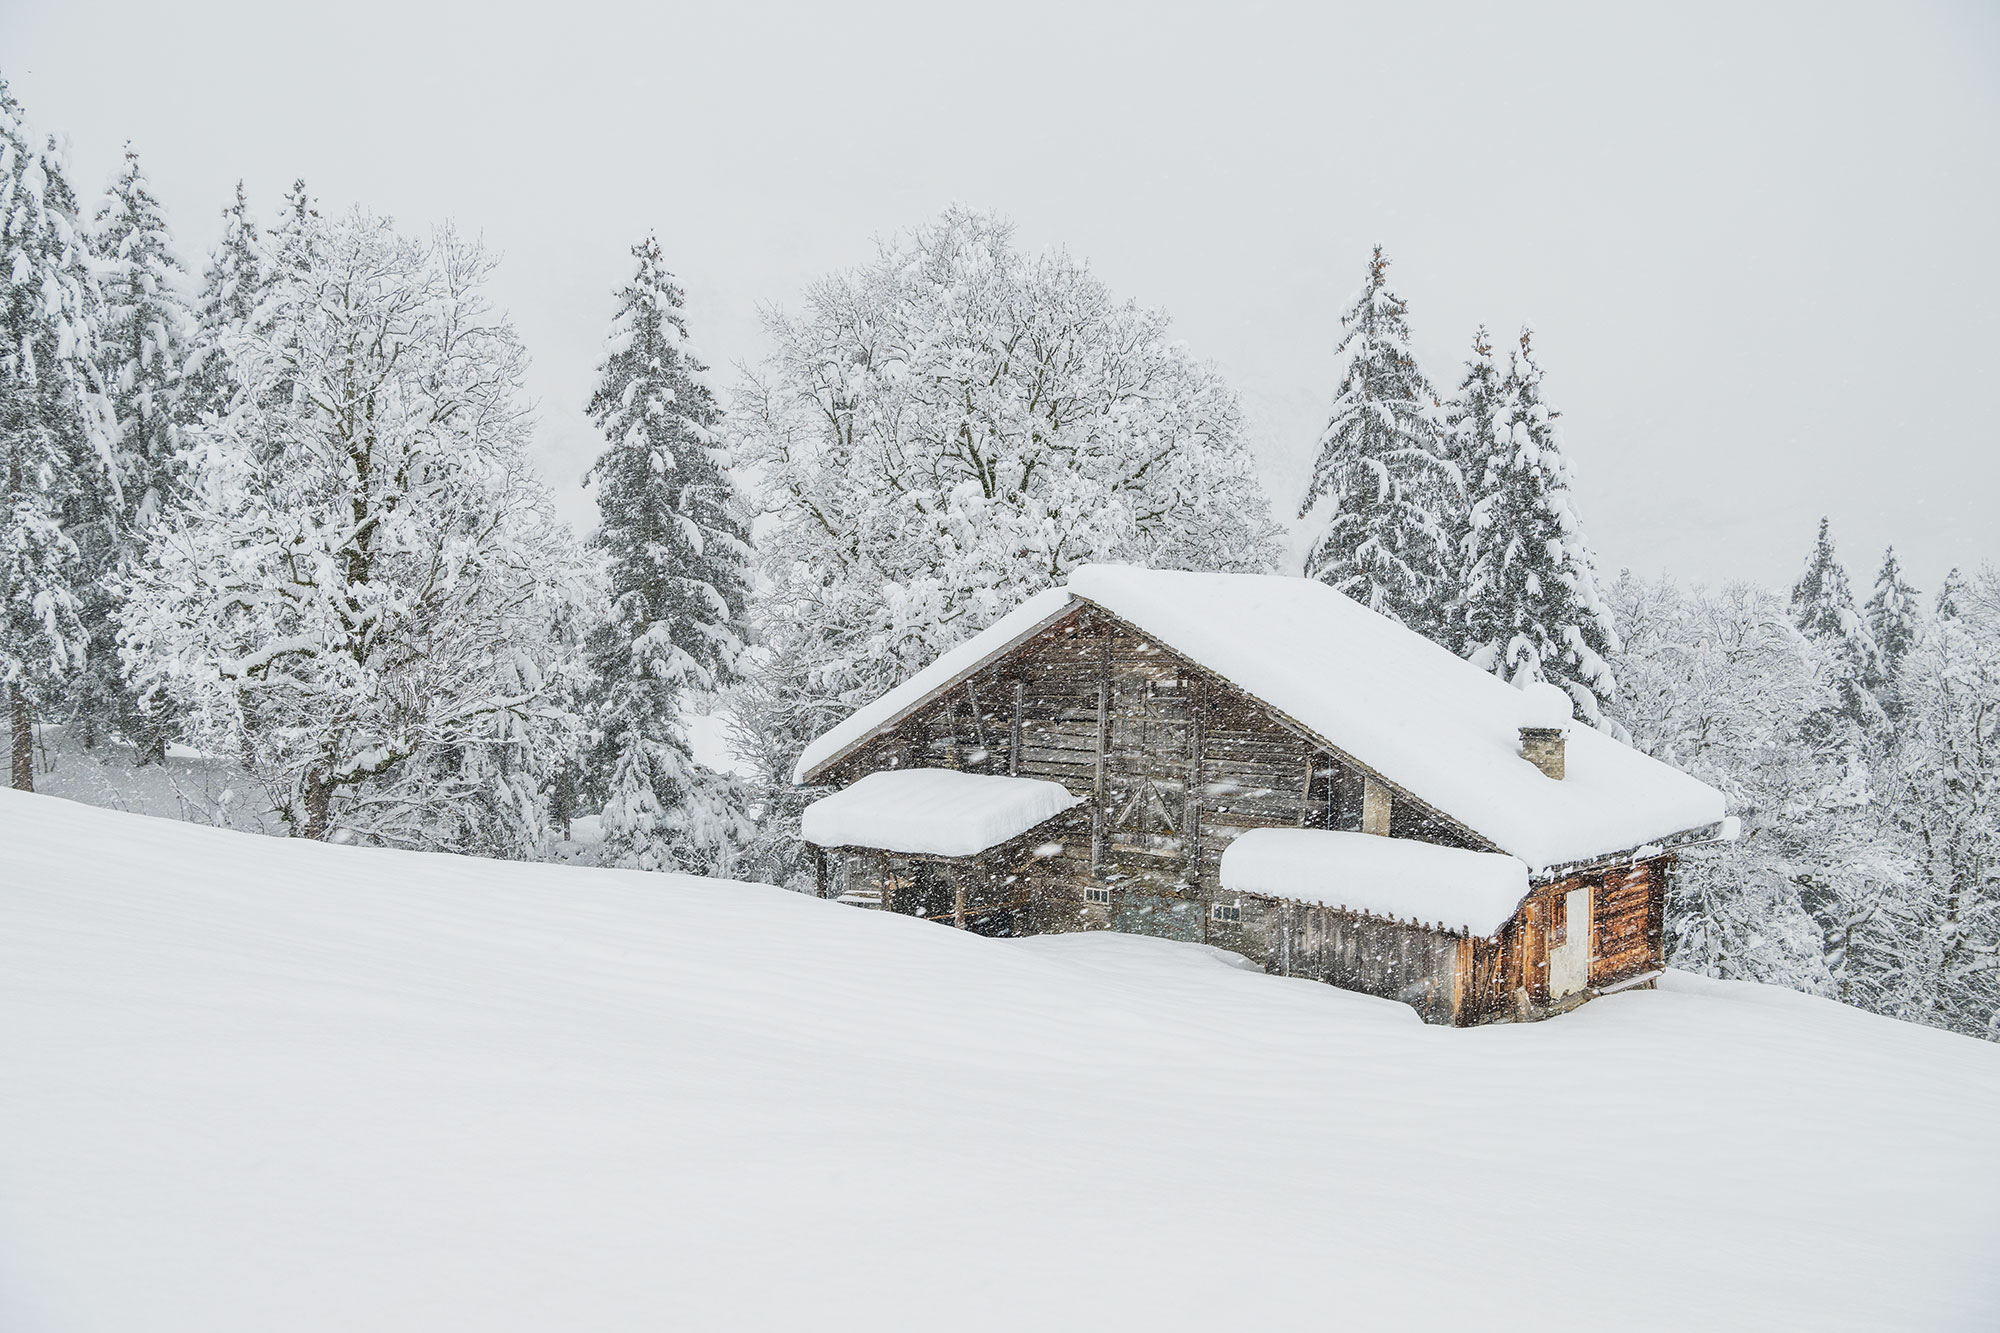 Mountain chalet in Switzerland in a snowstorm.